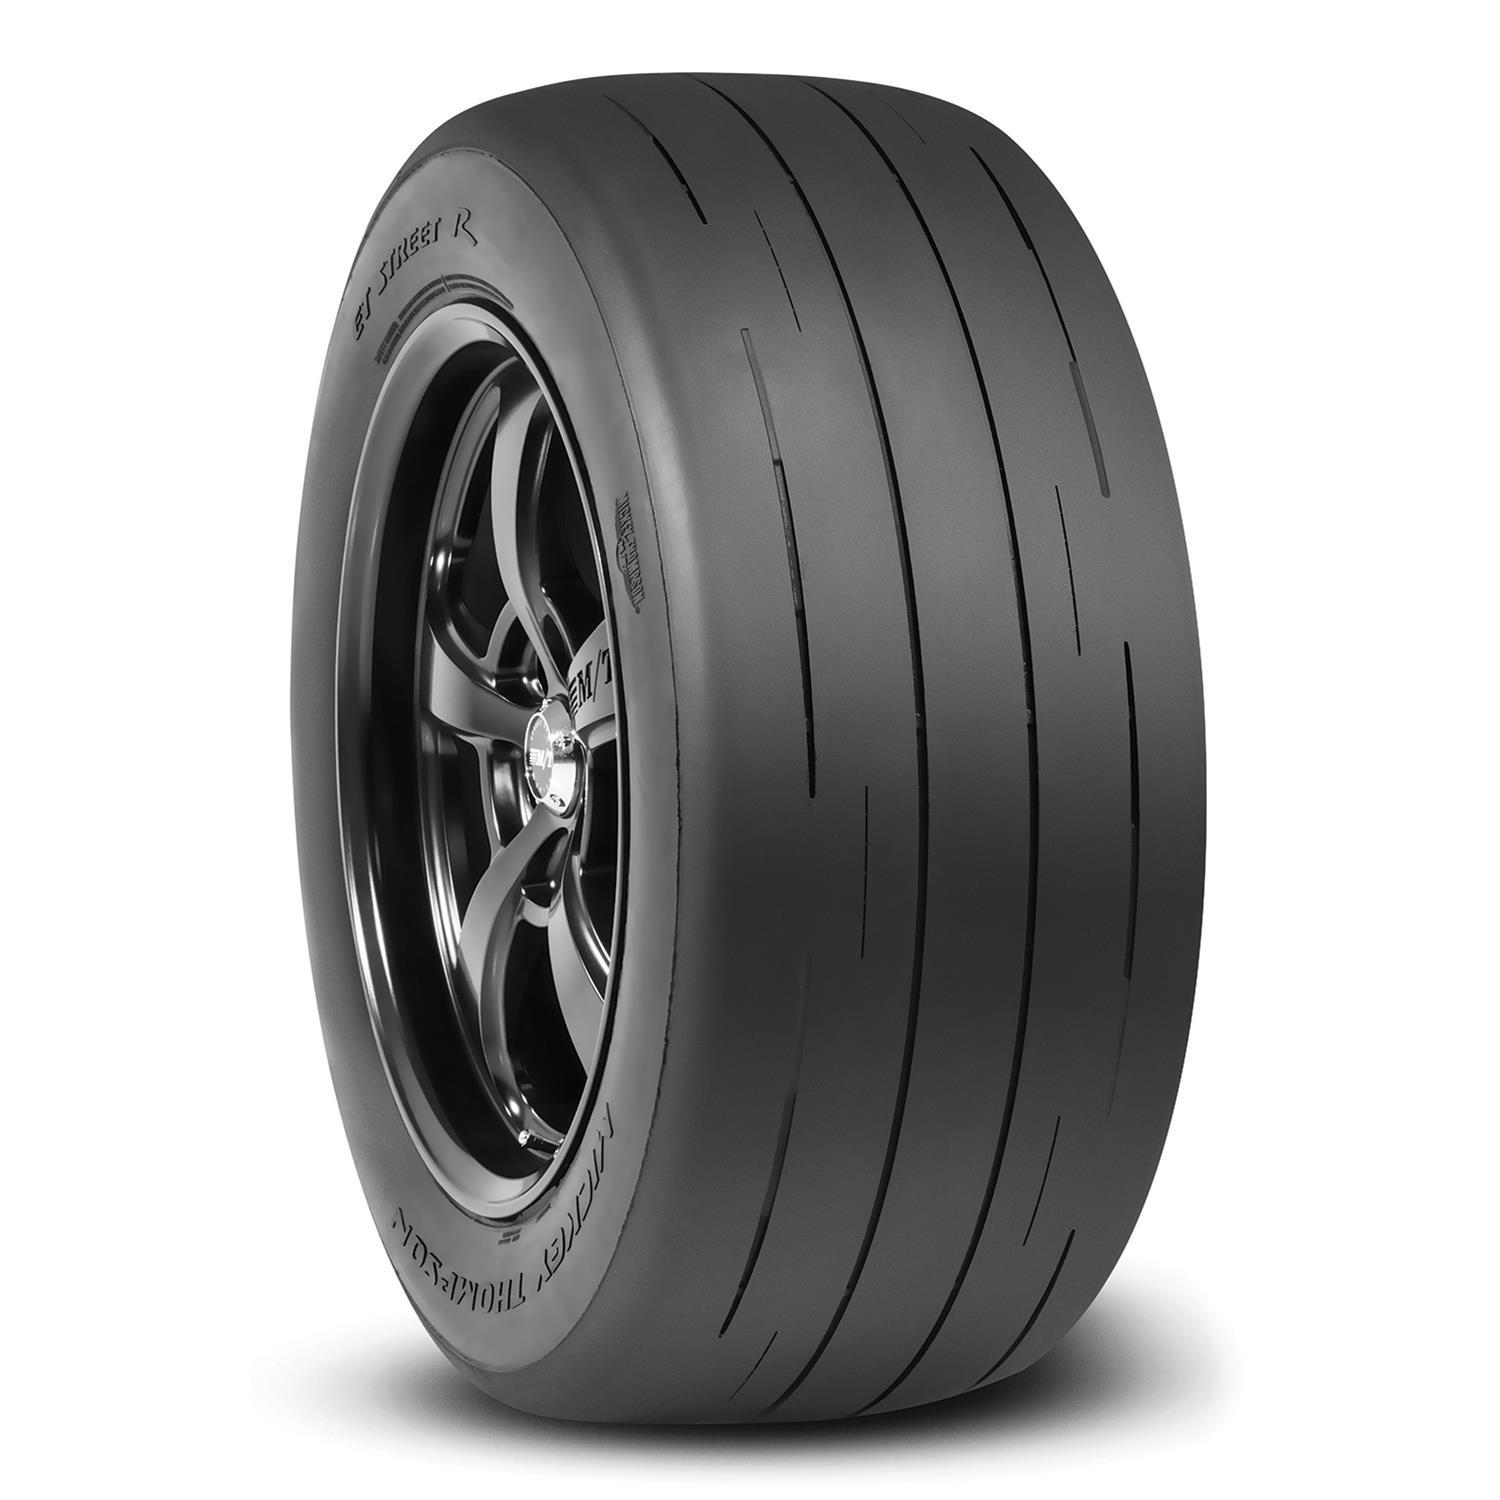 P315/35R17 ET Street R Tire - 255601